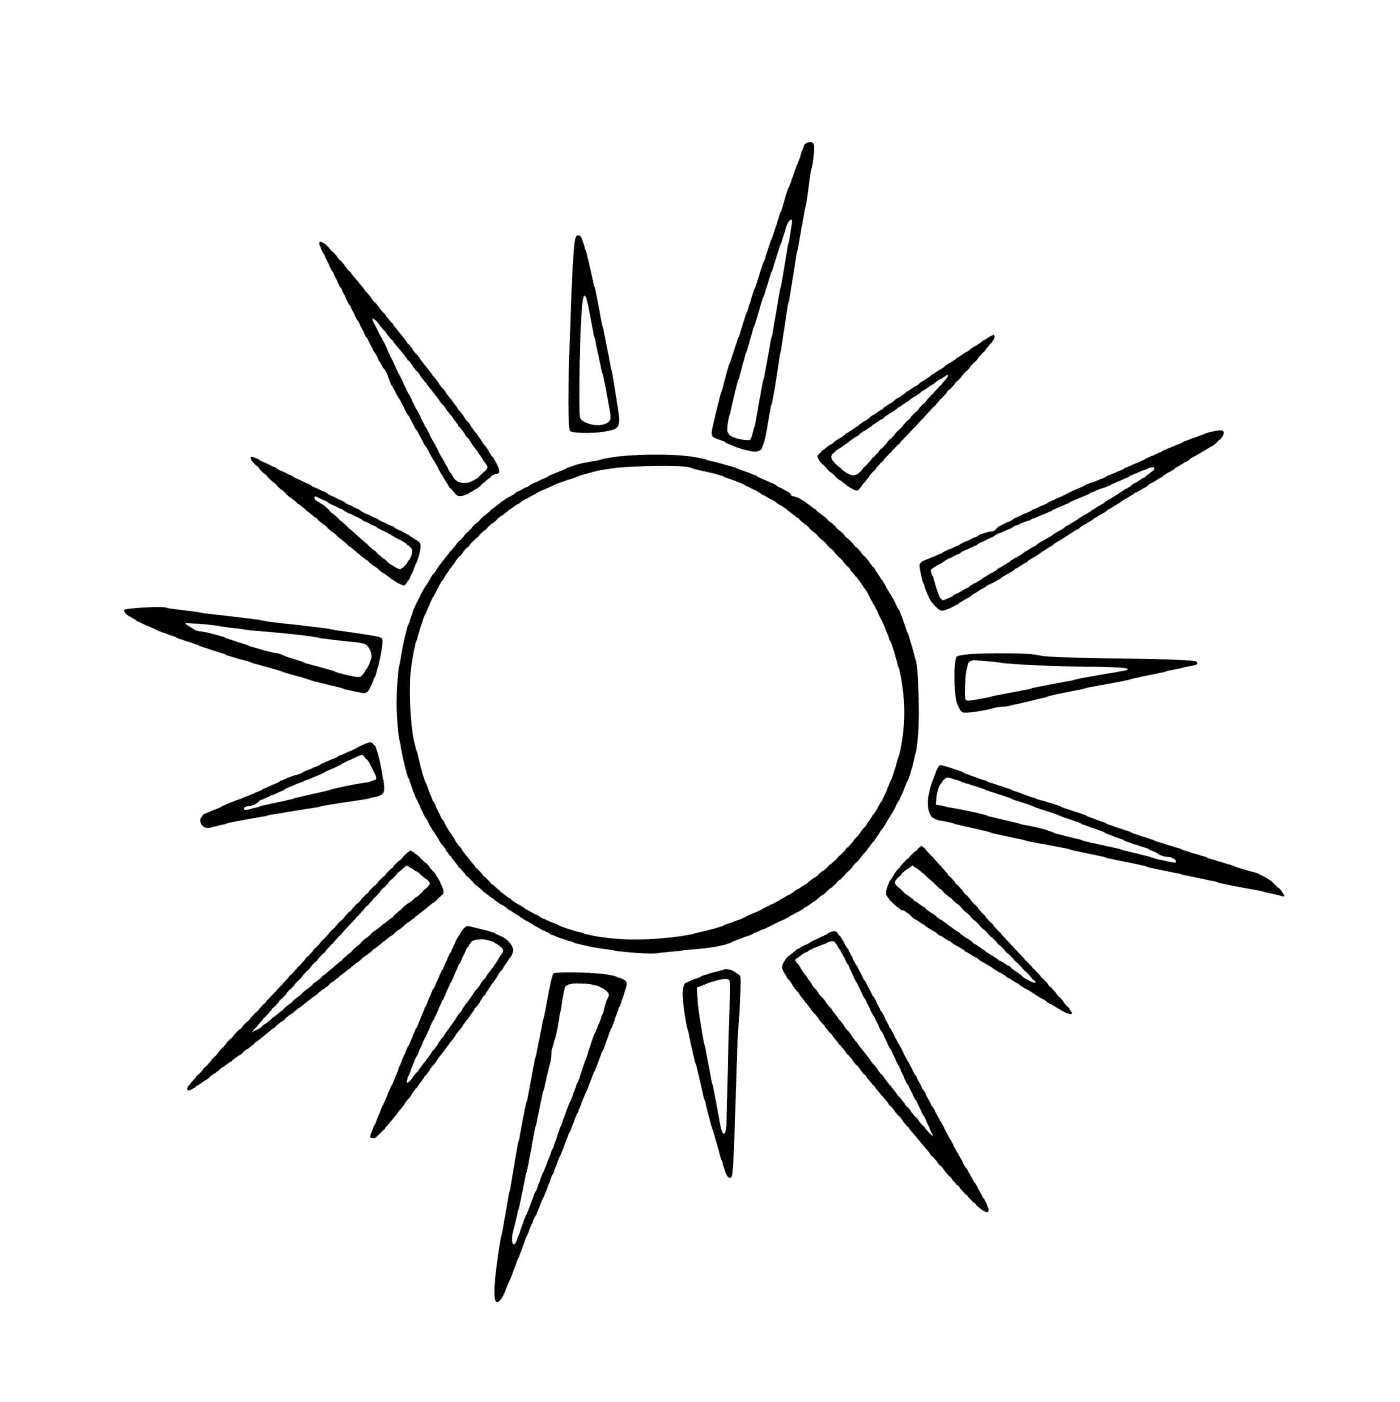   Soleil avec rayonnement pointu 